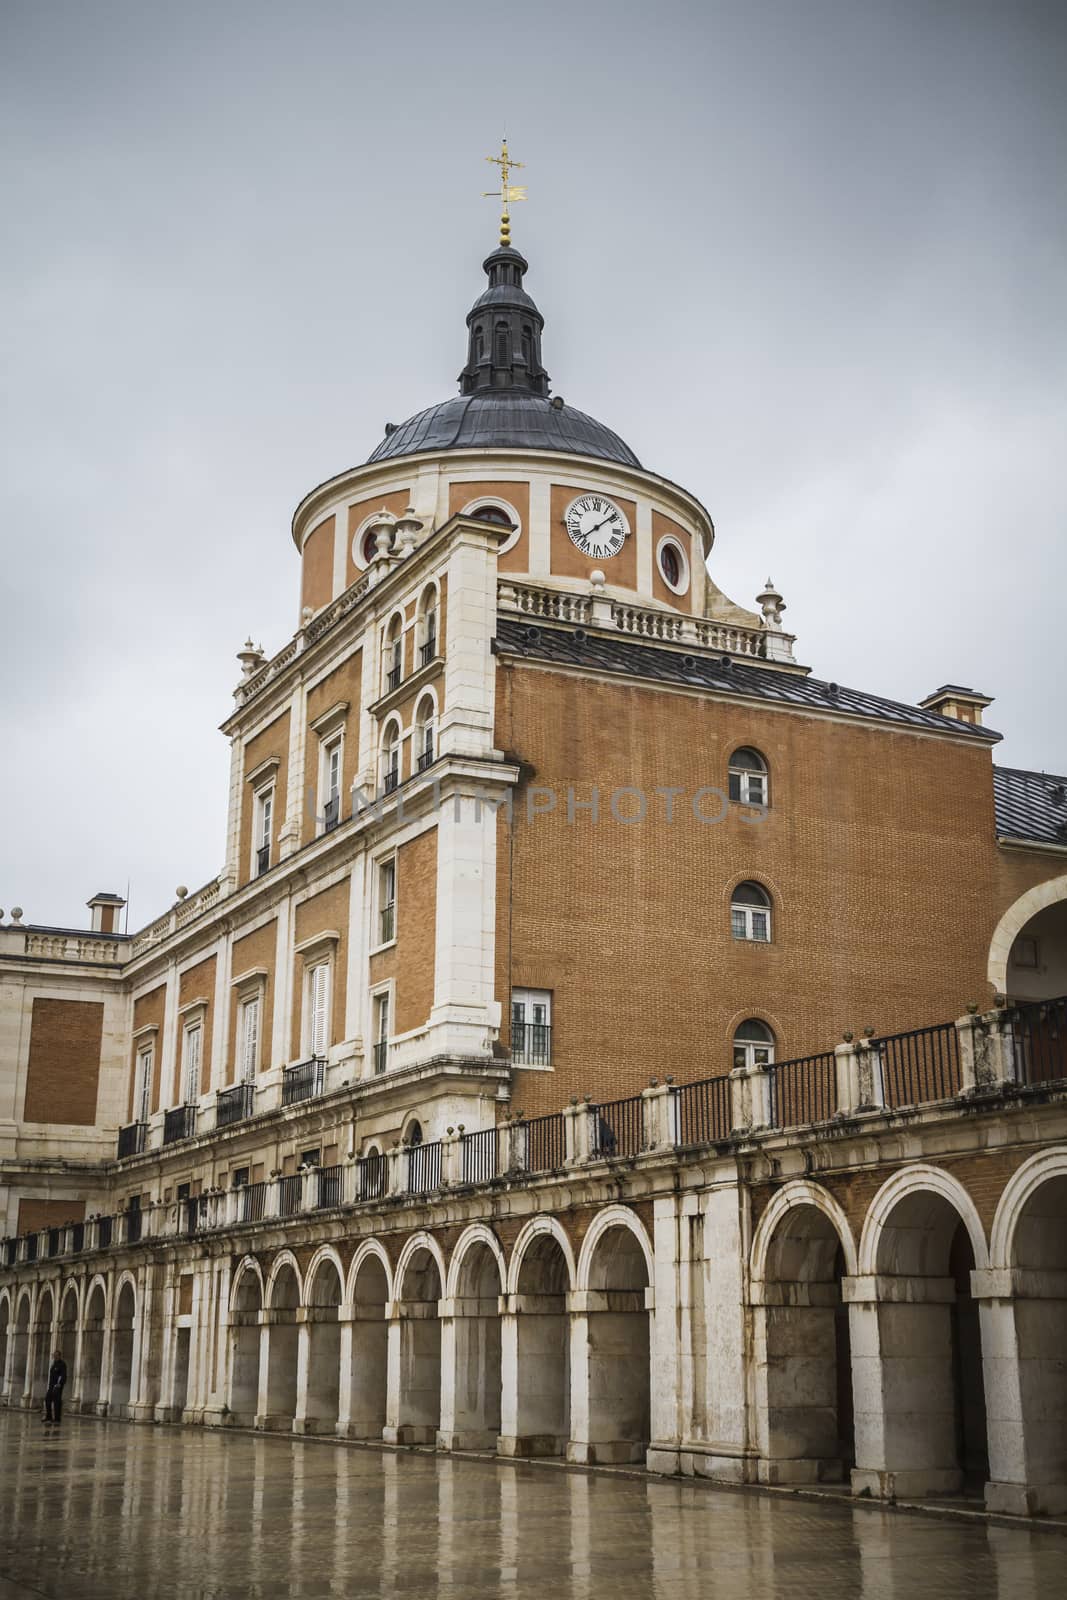 Unesco, majestic palace of Aranjuez in Madrid, Spain by FernandoCortes